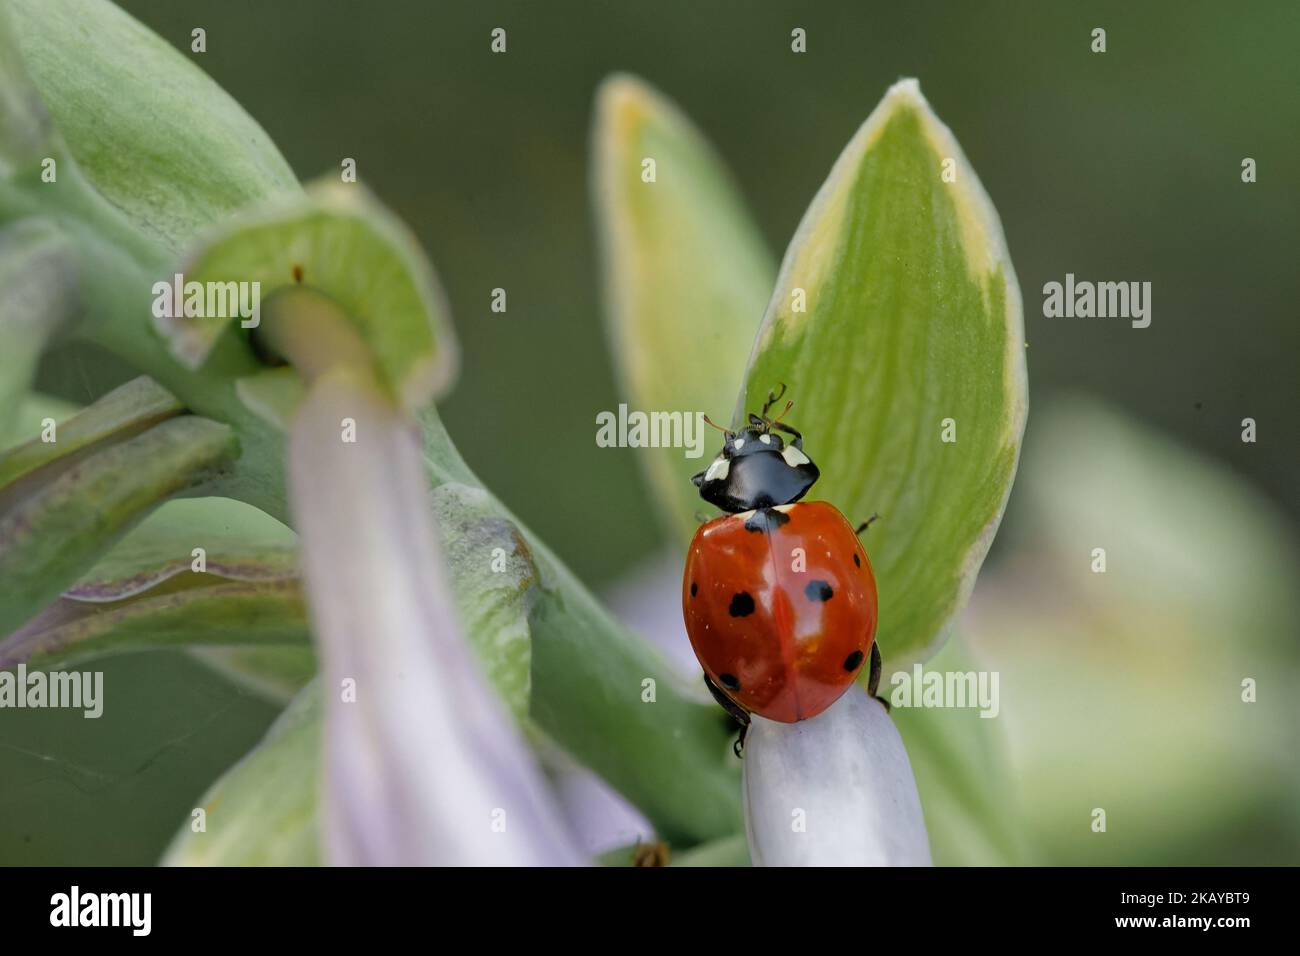 A closeup of a seven-spot ladybug on a plant leaf Stock Photo